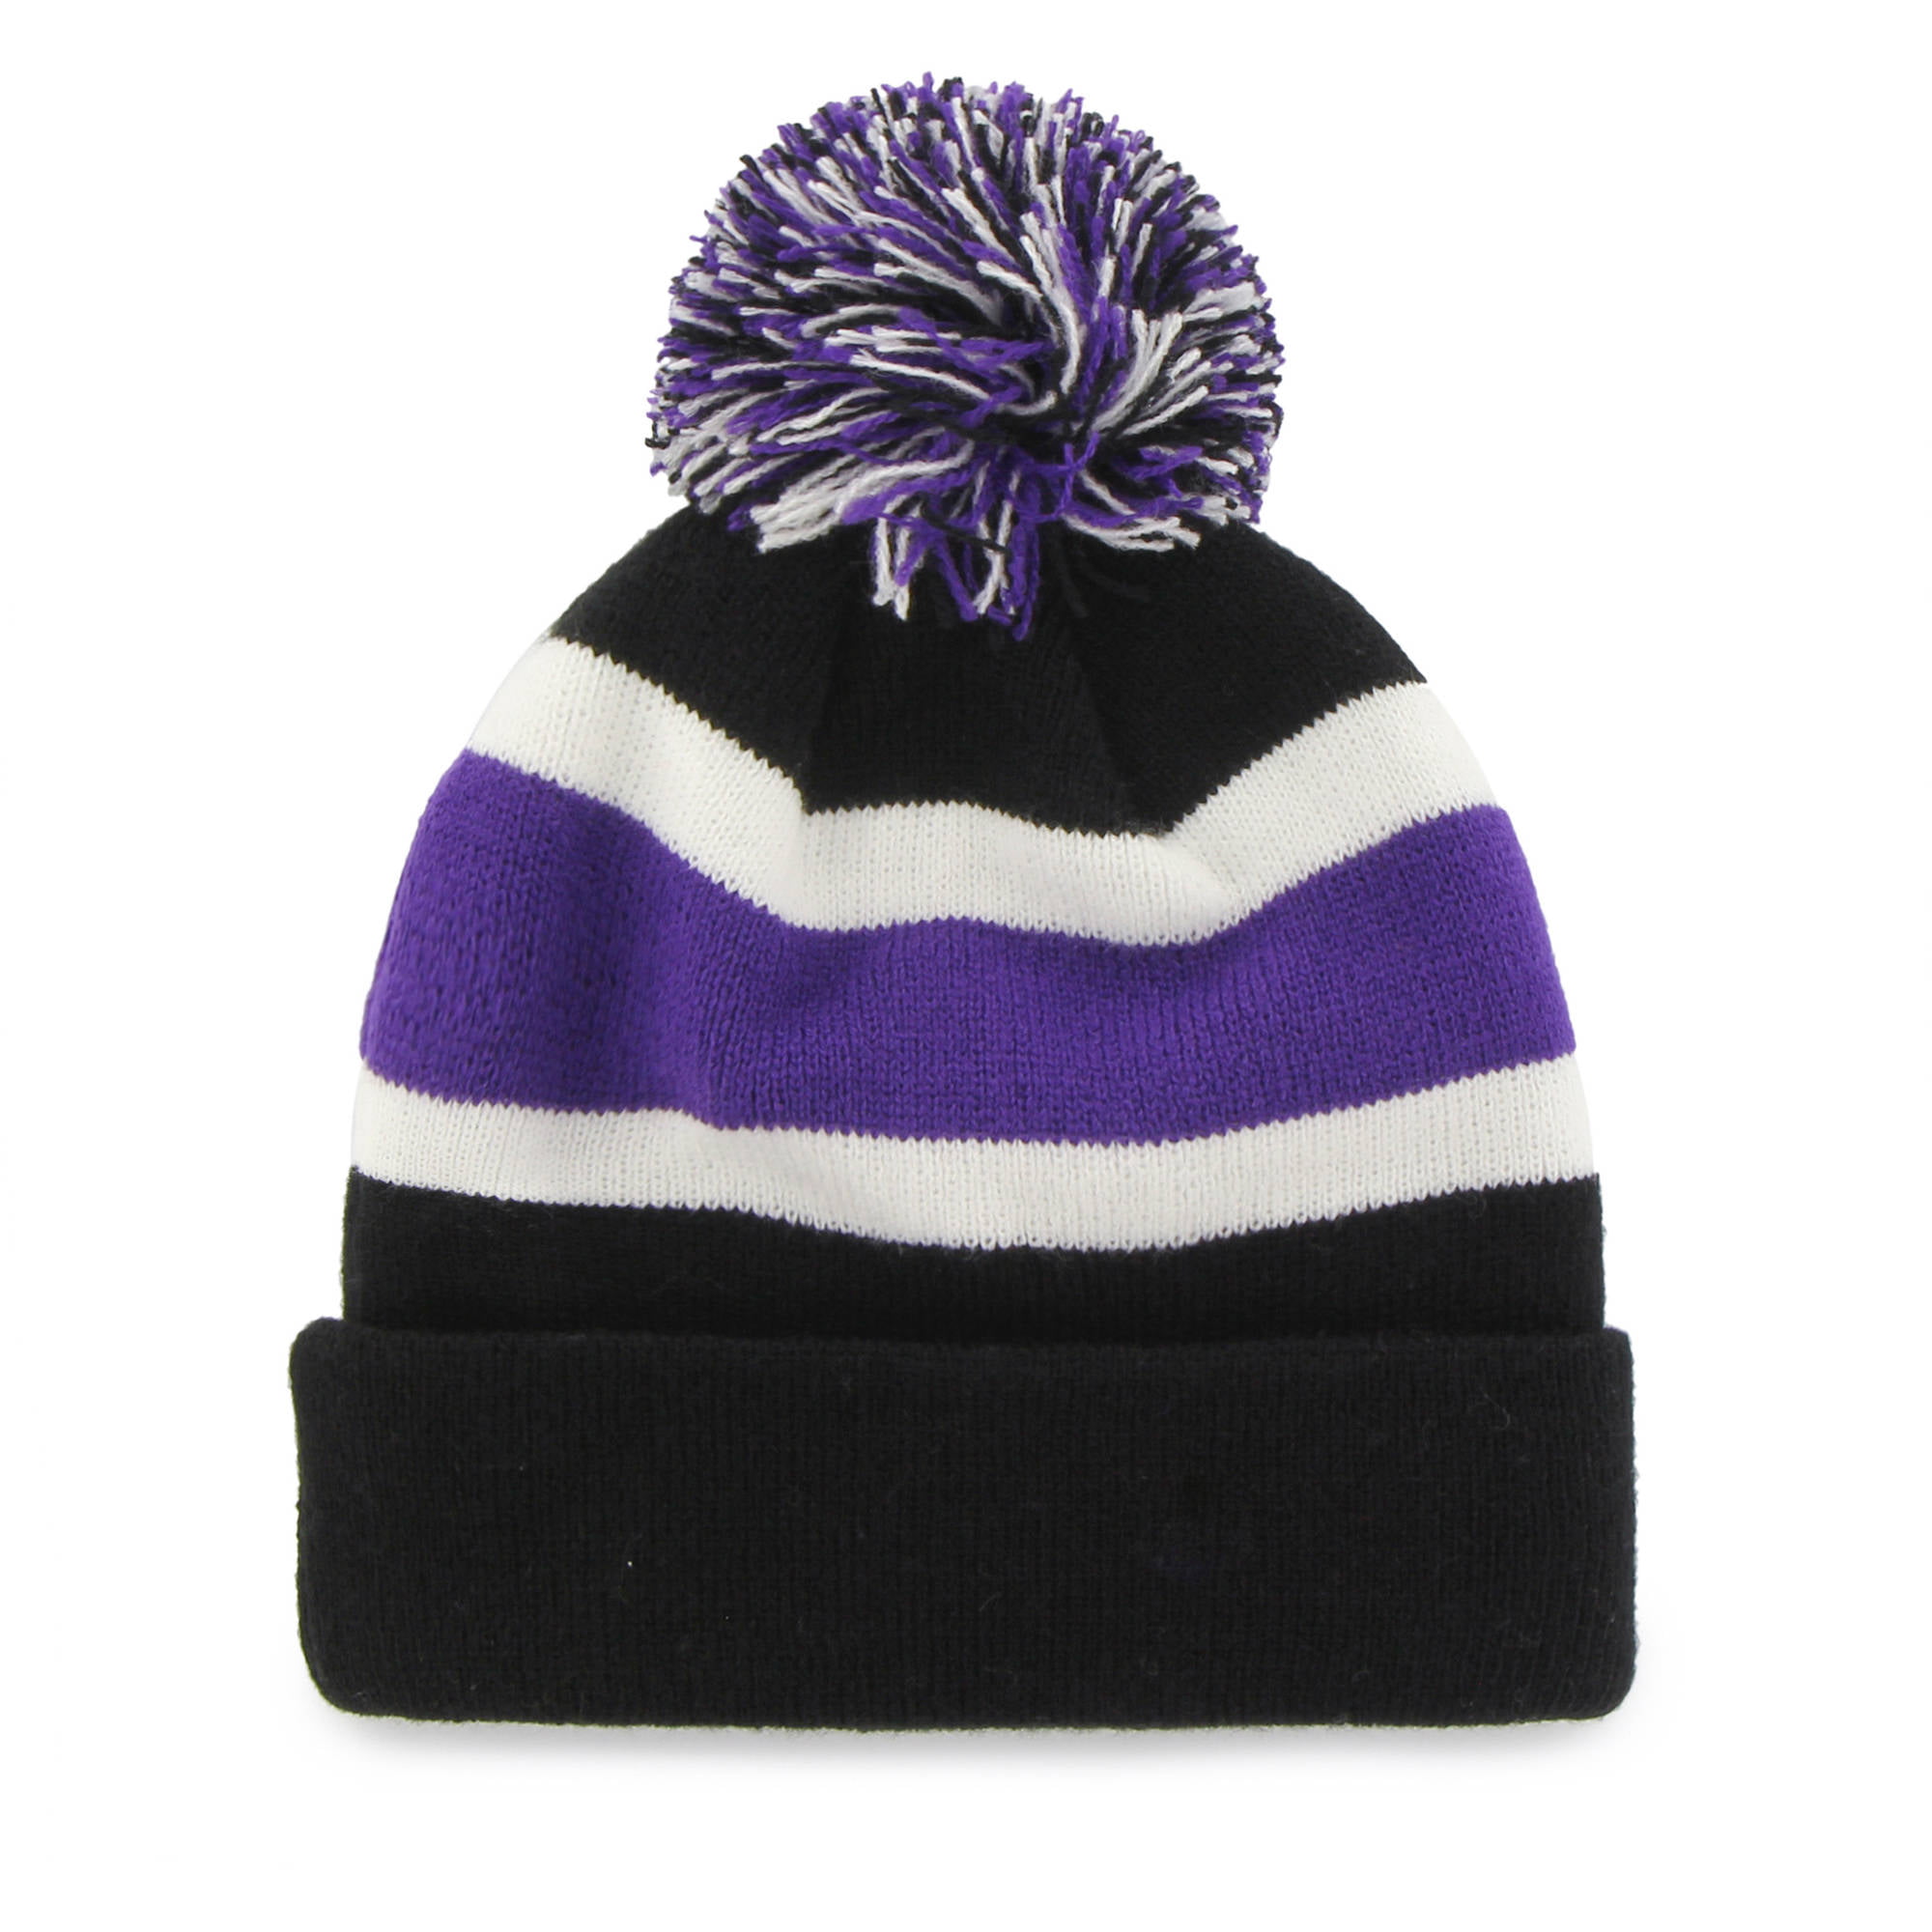 Baltimore Ravens Authentic New Beanie Toque Knit Hat NFL Purple Sports ...